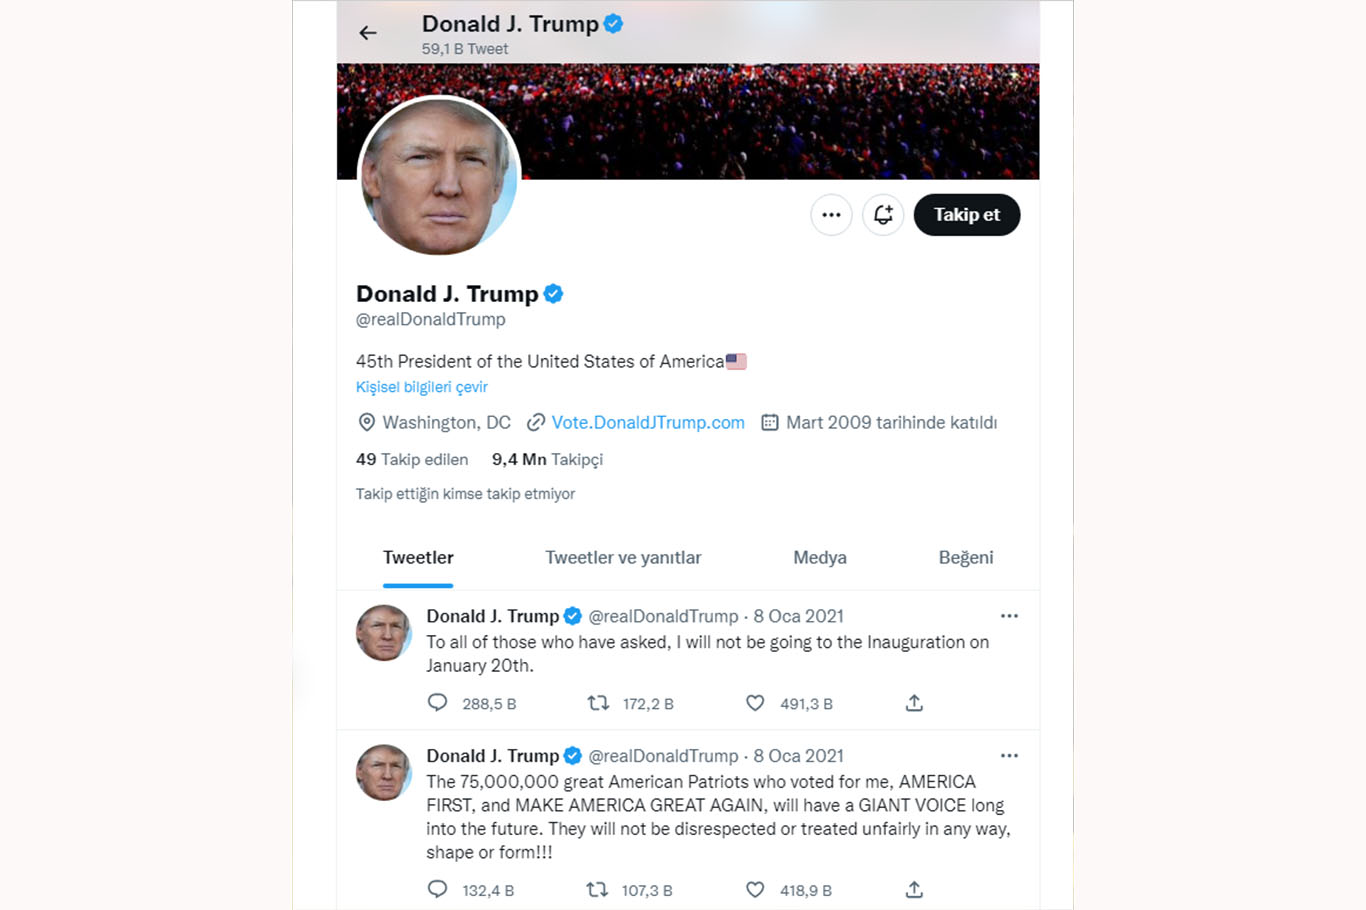 Twitter restores Donald Trump's account